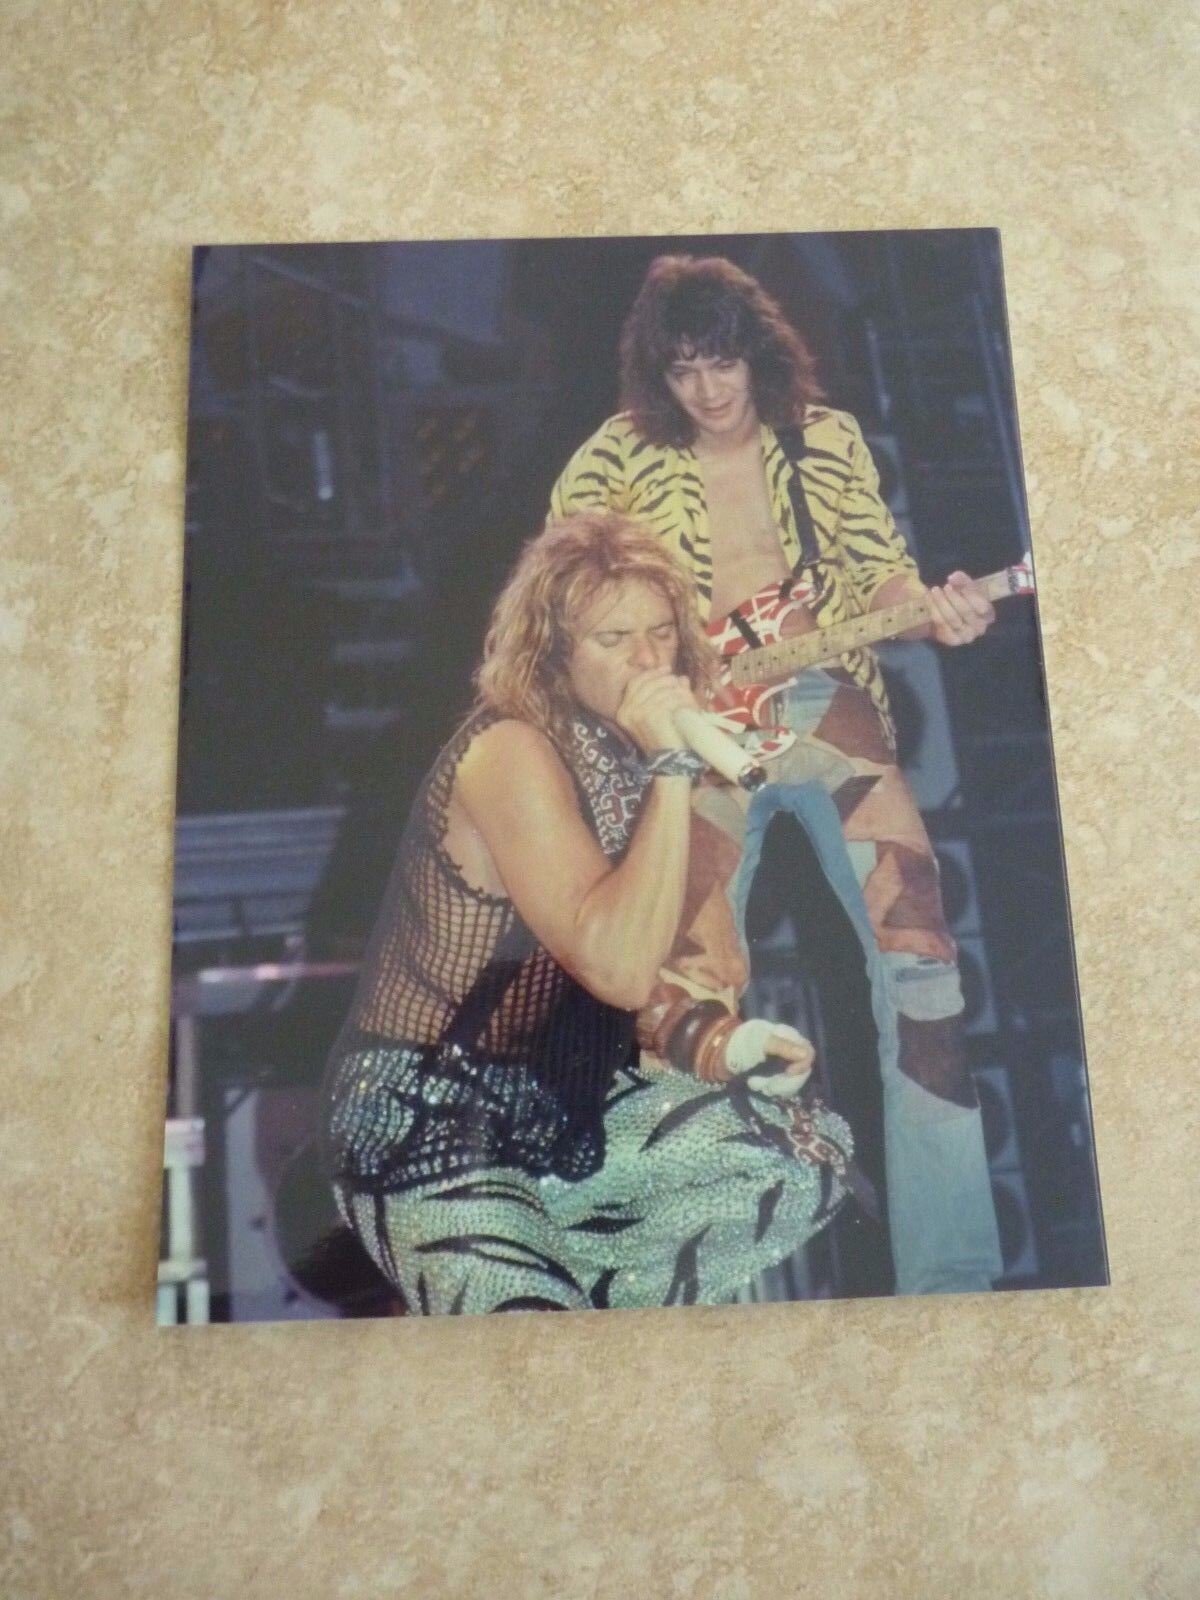 Van Halen Vintage Live 8x10 Combo Photo Poster painting #4 Eddie DLR